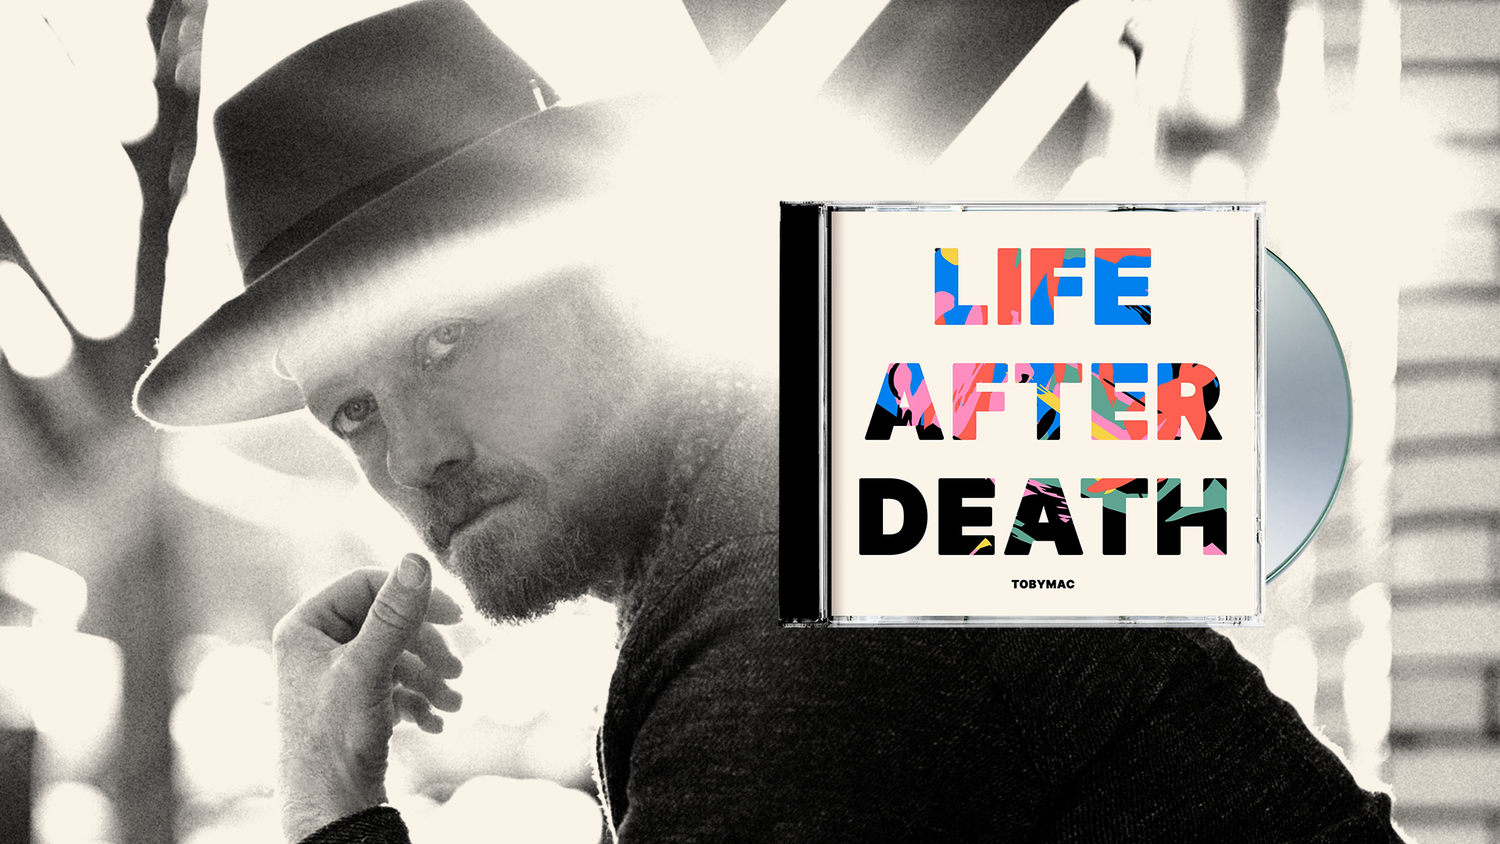 Life After Death (TobyMac album) - Wikipedia